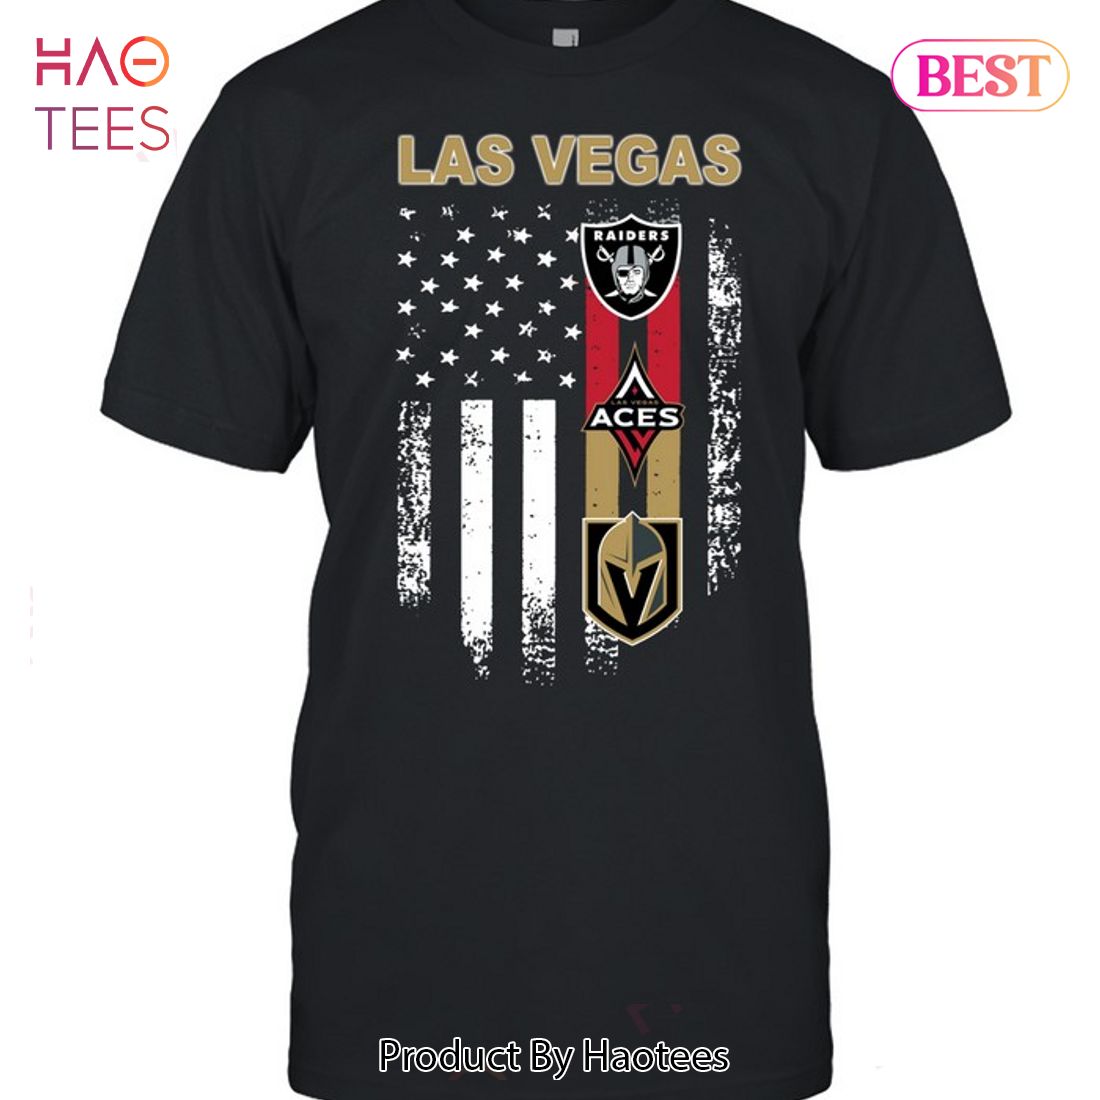 Las Vegas Team Sport Las Vegas Raiders Las Vegas Aces Vegas Golden